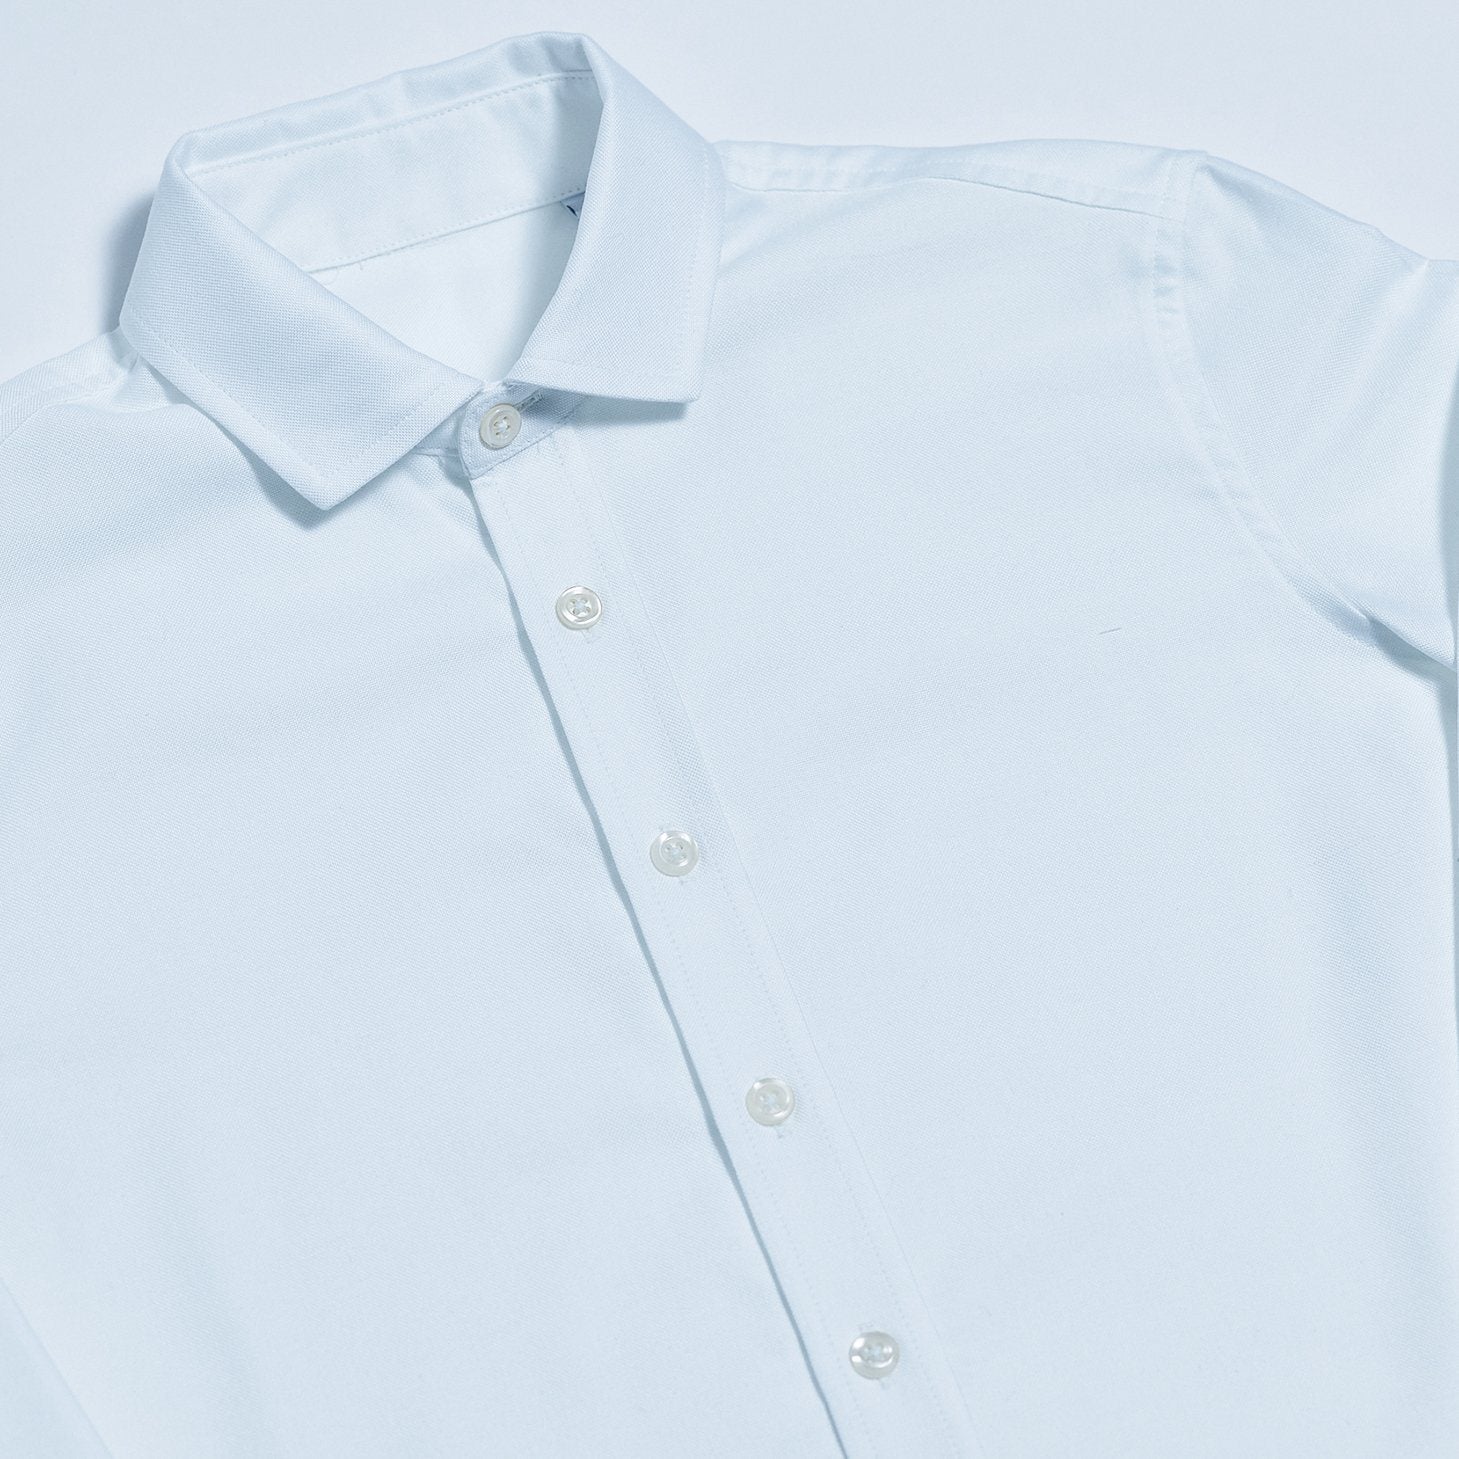 quality white dress shirts